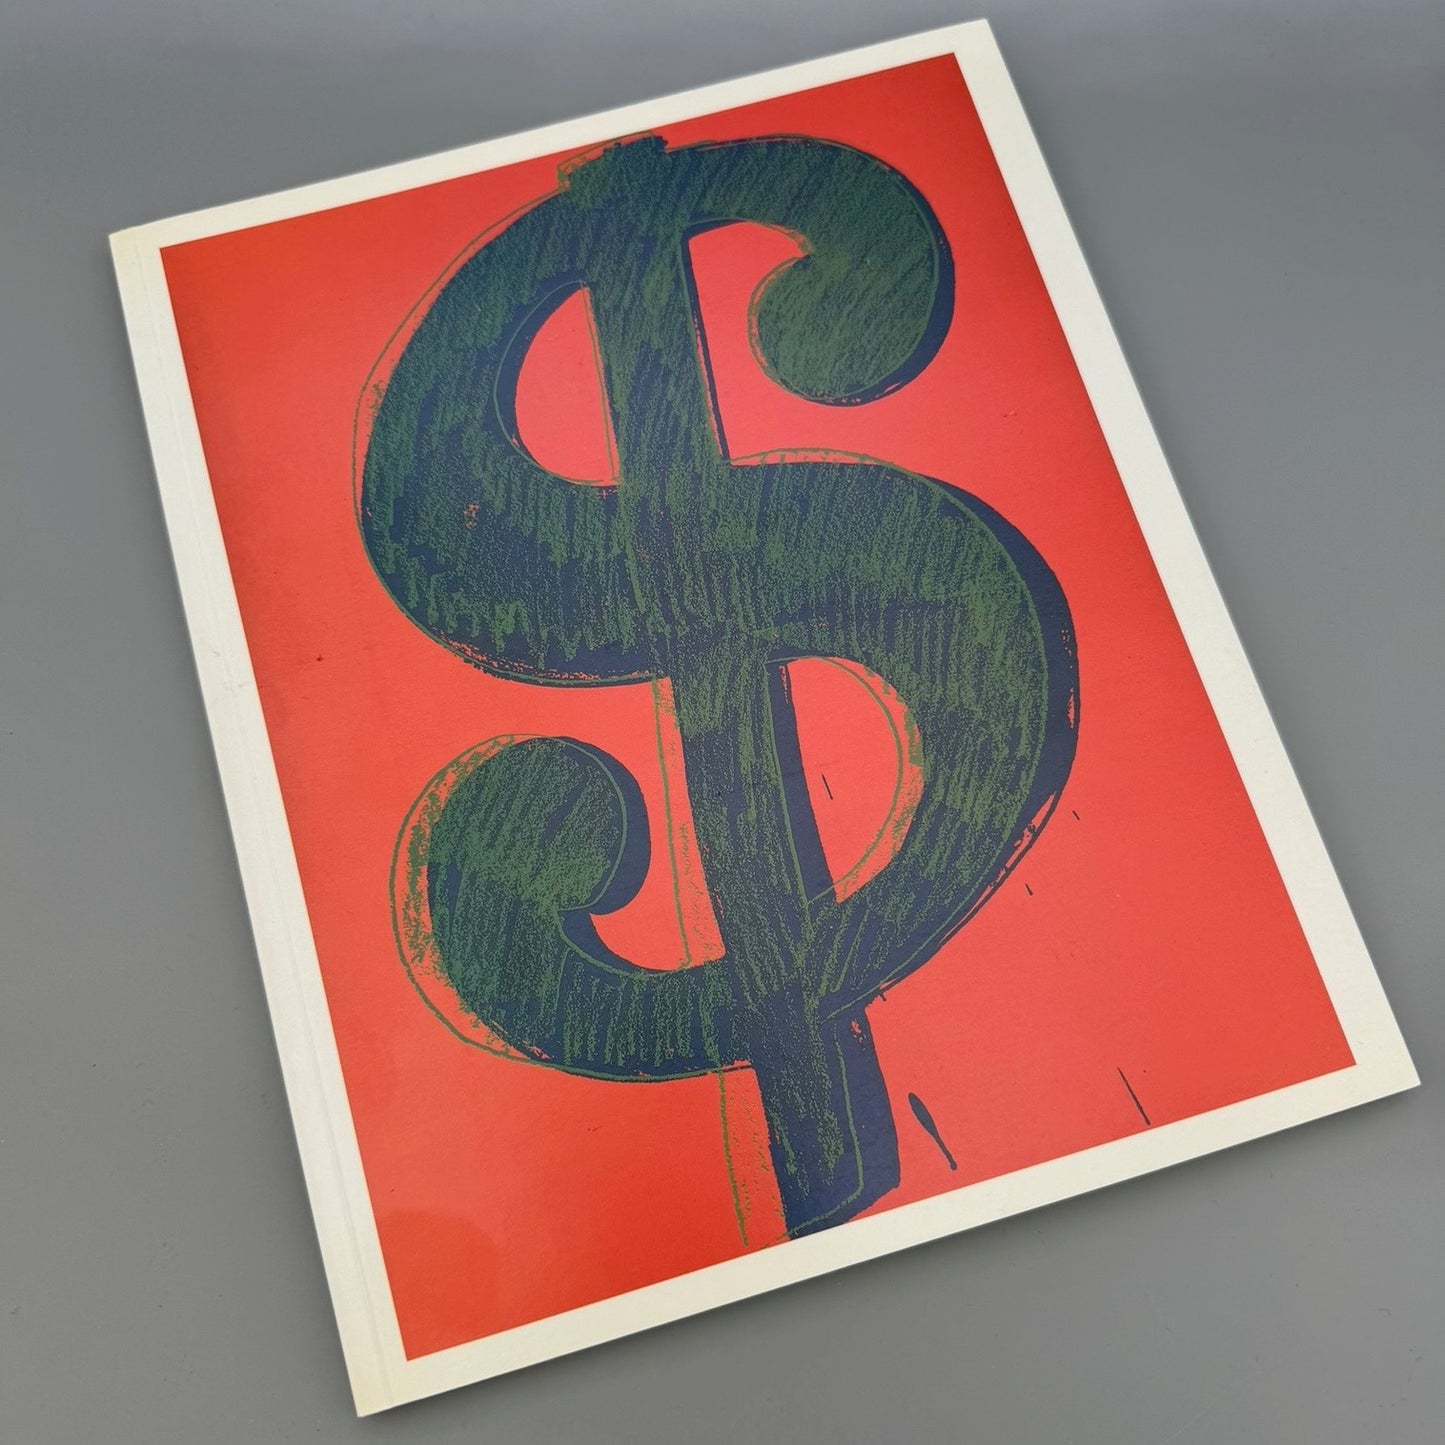 Andy Warhol $ Dollar Signs, 1997